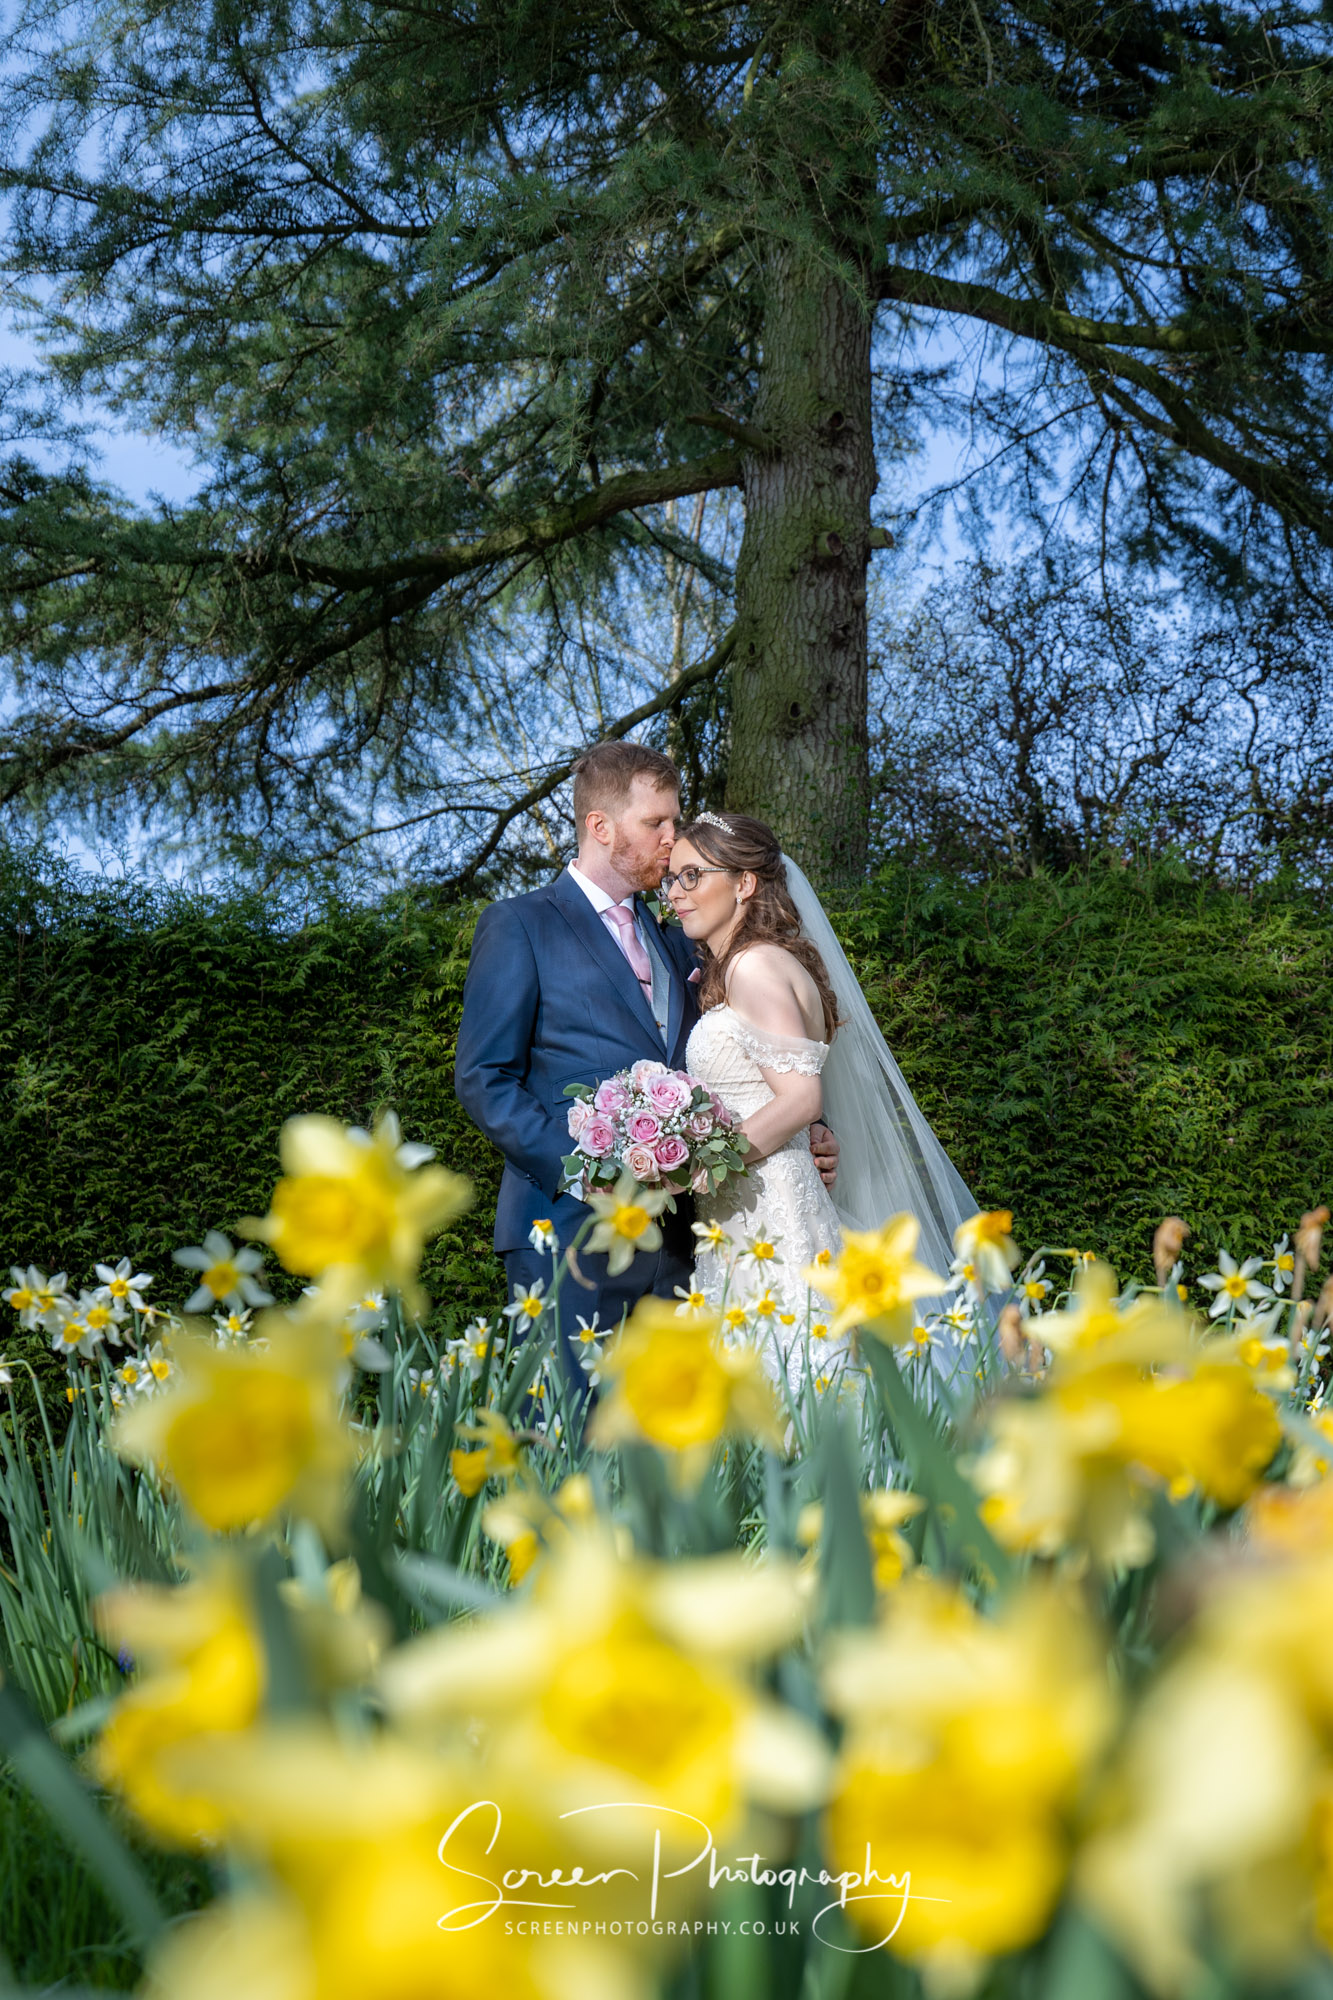 The Shottle Hall Estate Wedding Venue Derby Derbyshire easter Sunday daffodils flowers